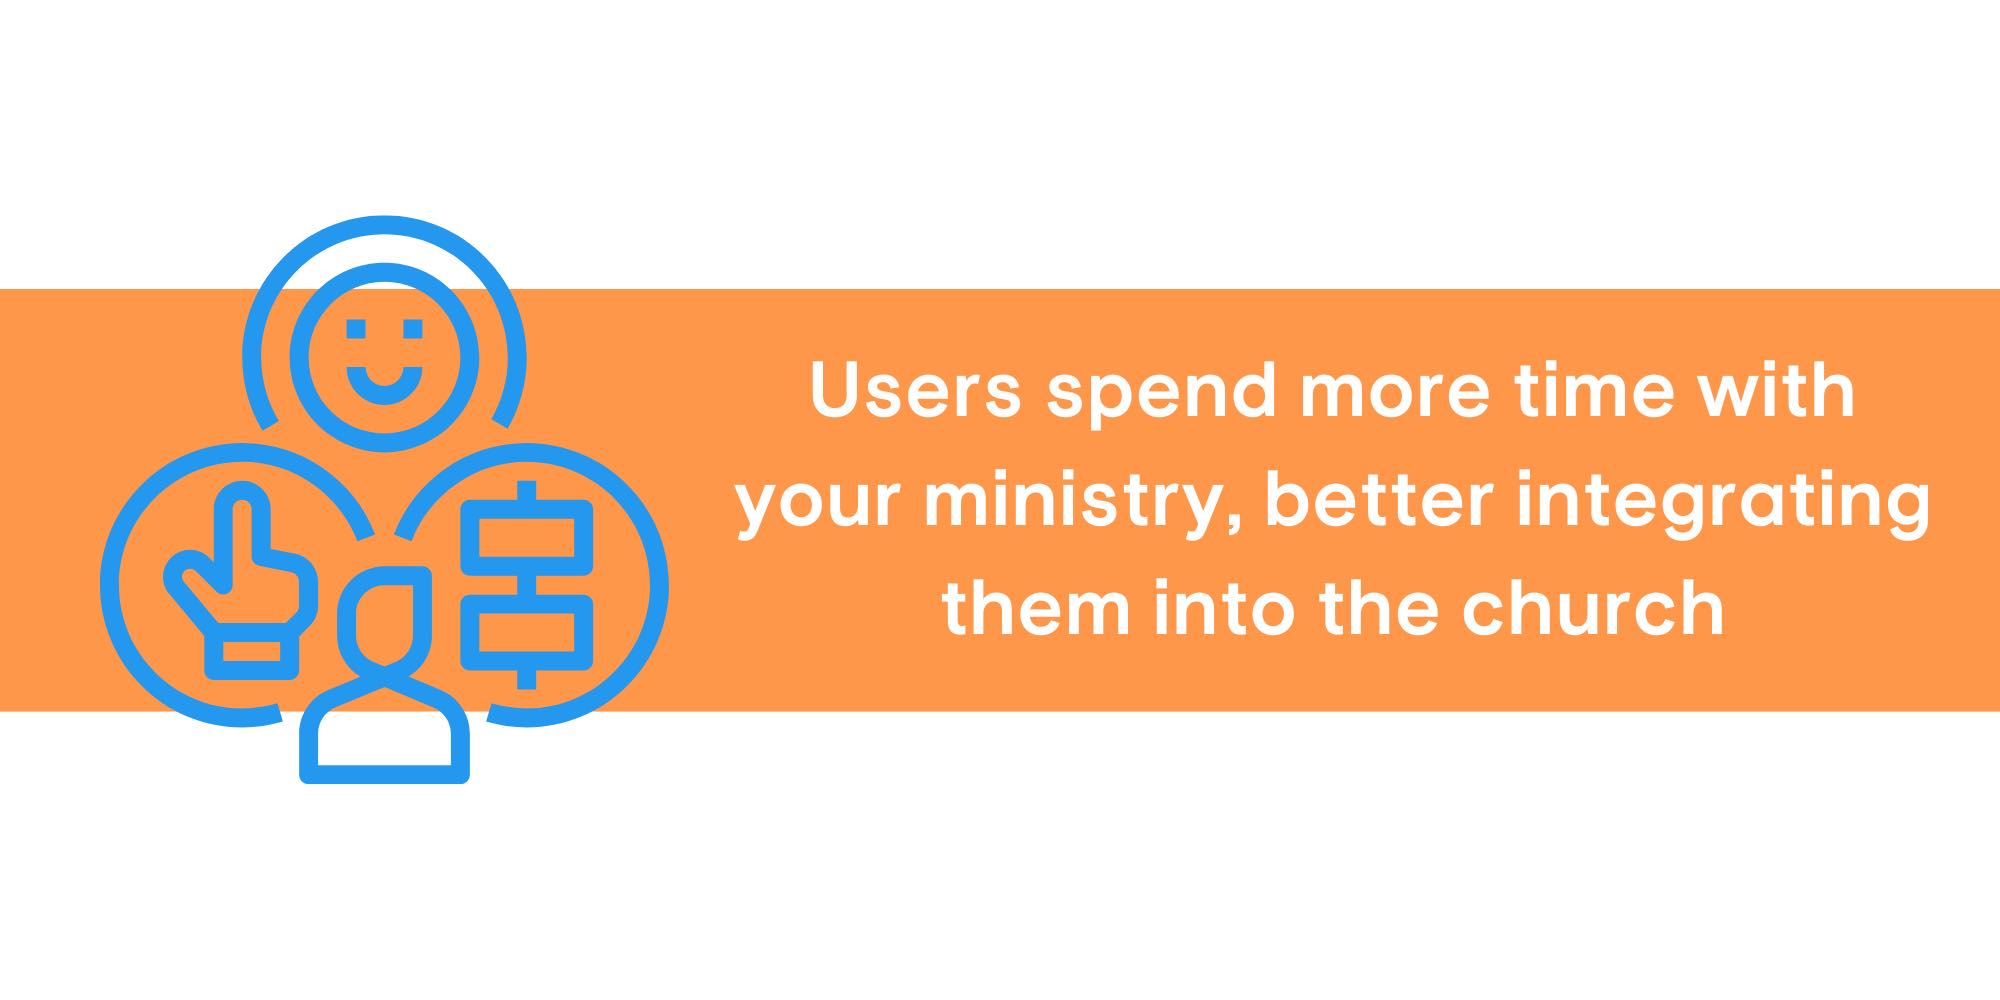 Members can access their church profile through the smartphone app